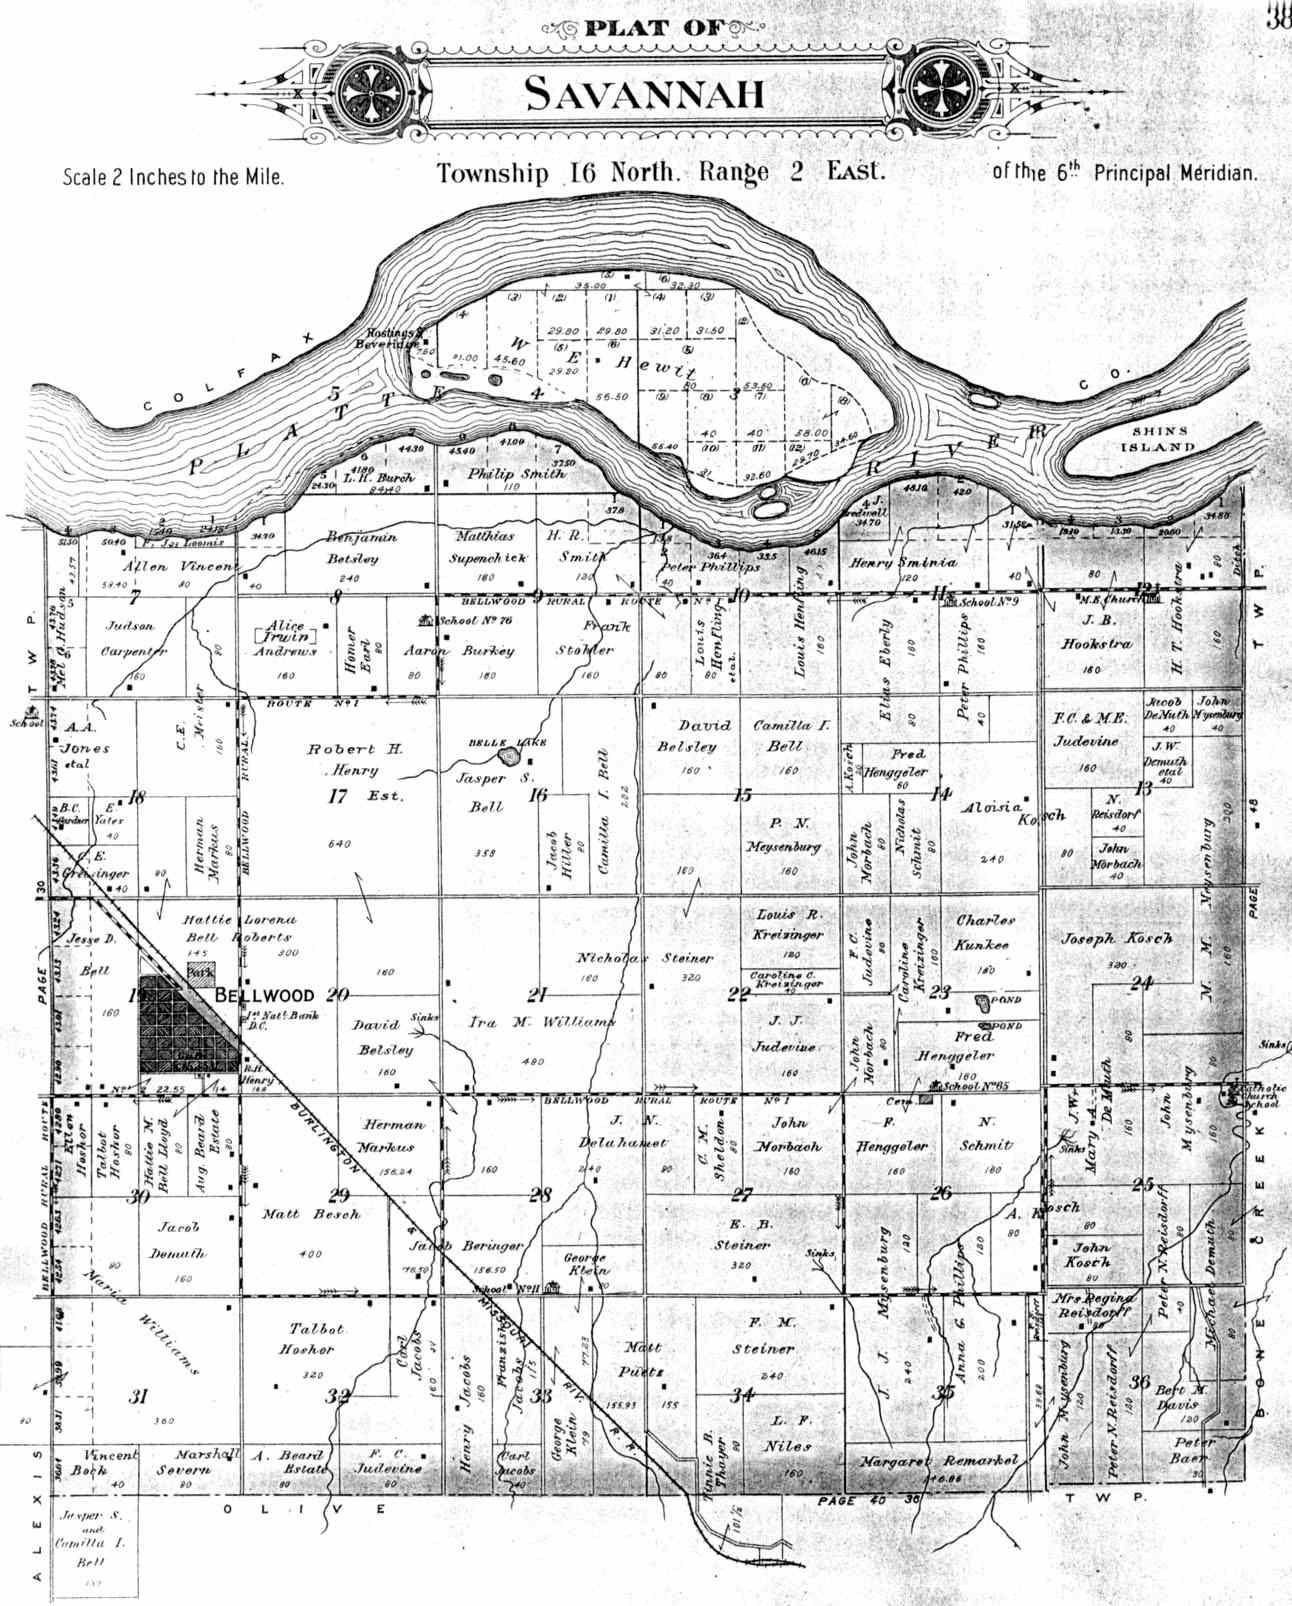 Savannah Township Butler County Nebraska Plat Map for 1906